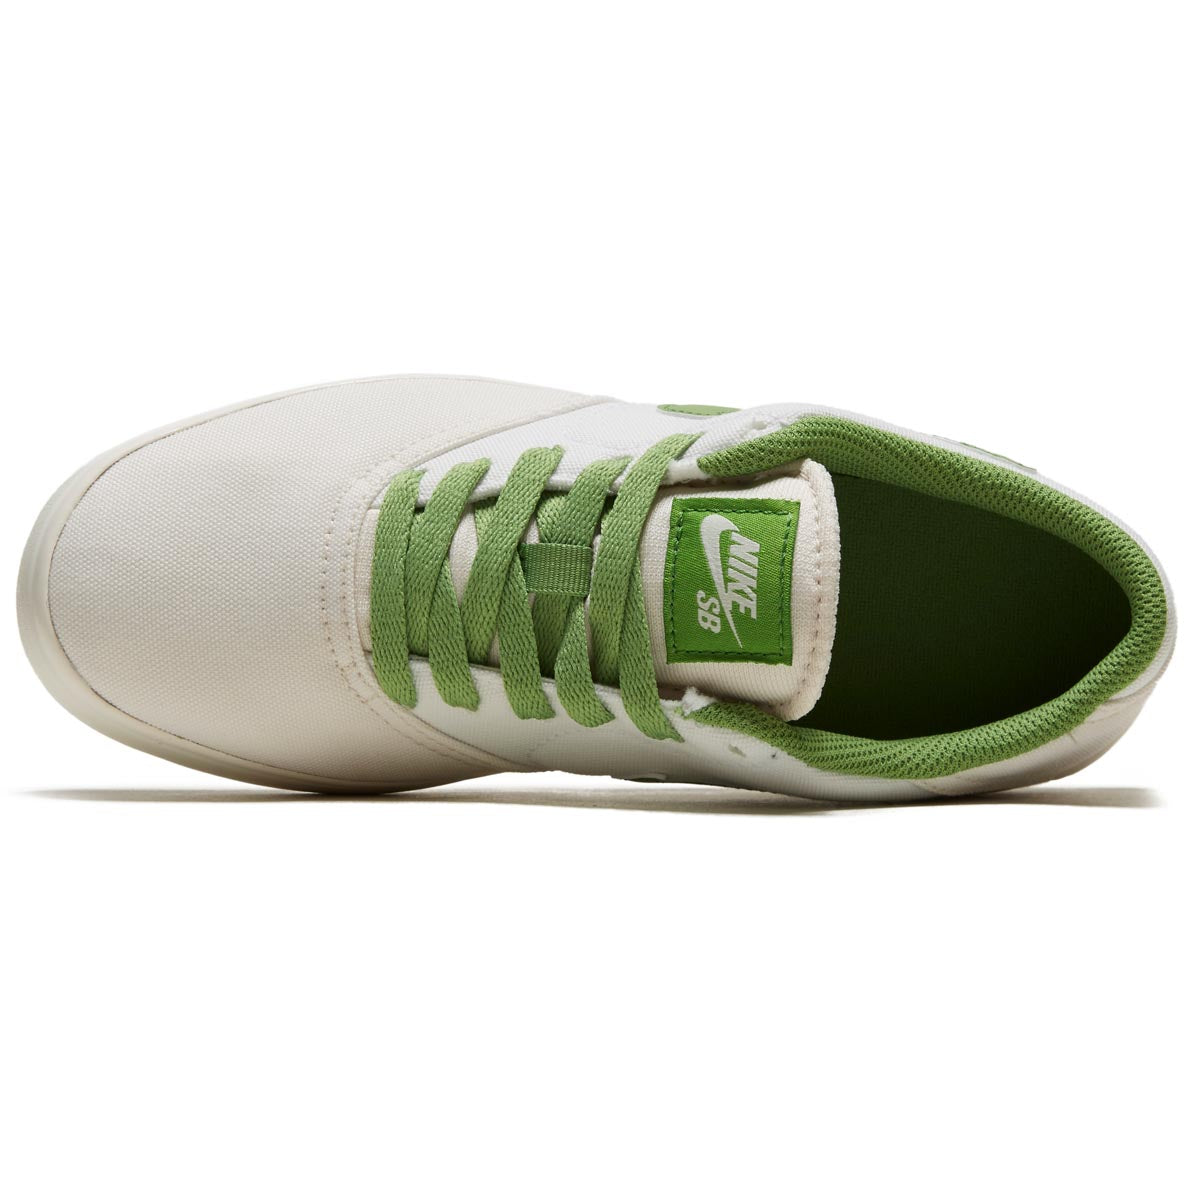 Nike SB Check Canvas Shoes - Phantom/Chlorophyll/Summit White/Sail image 3